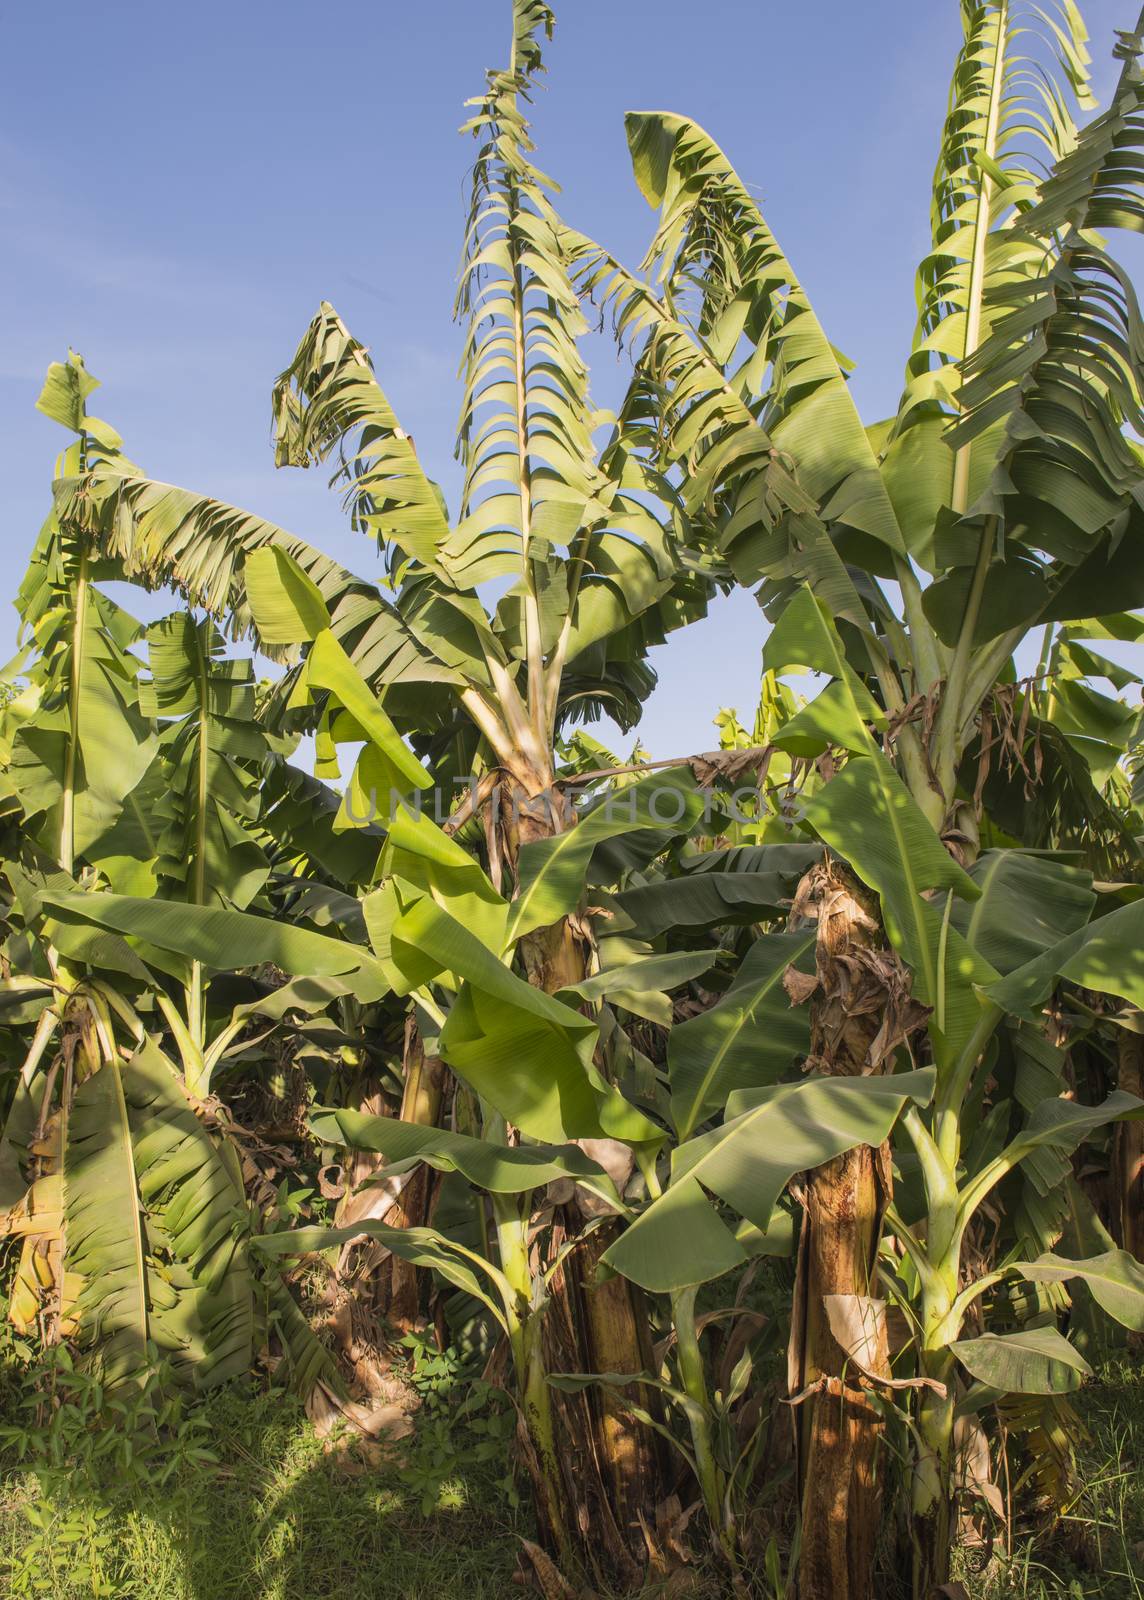 Dense vegetation of banana plants musa acuminata in tropical agricultural farm plantation